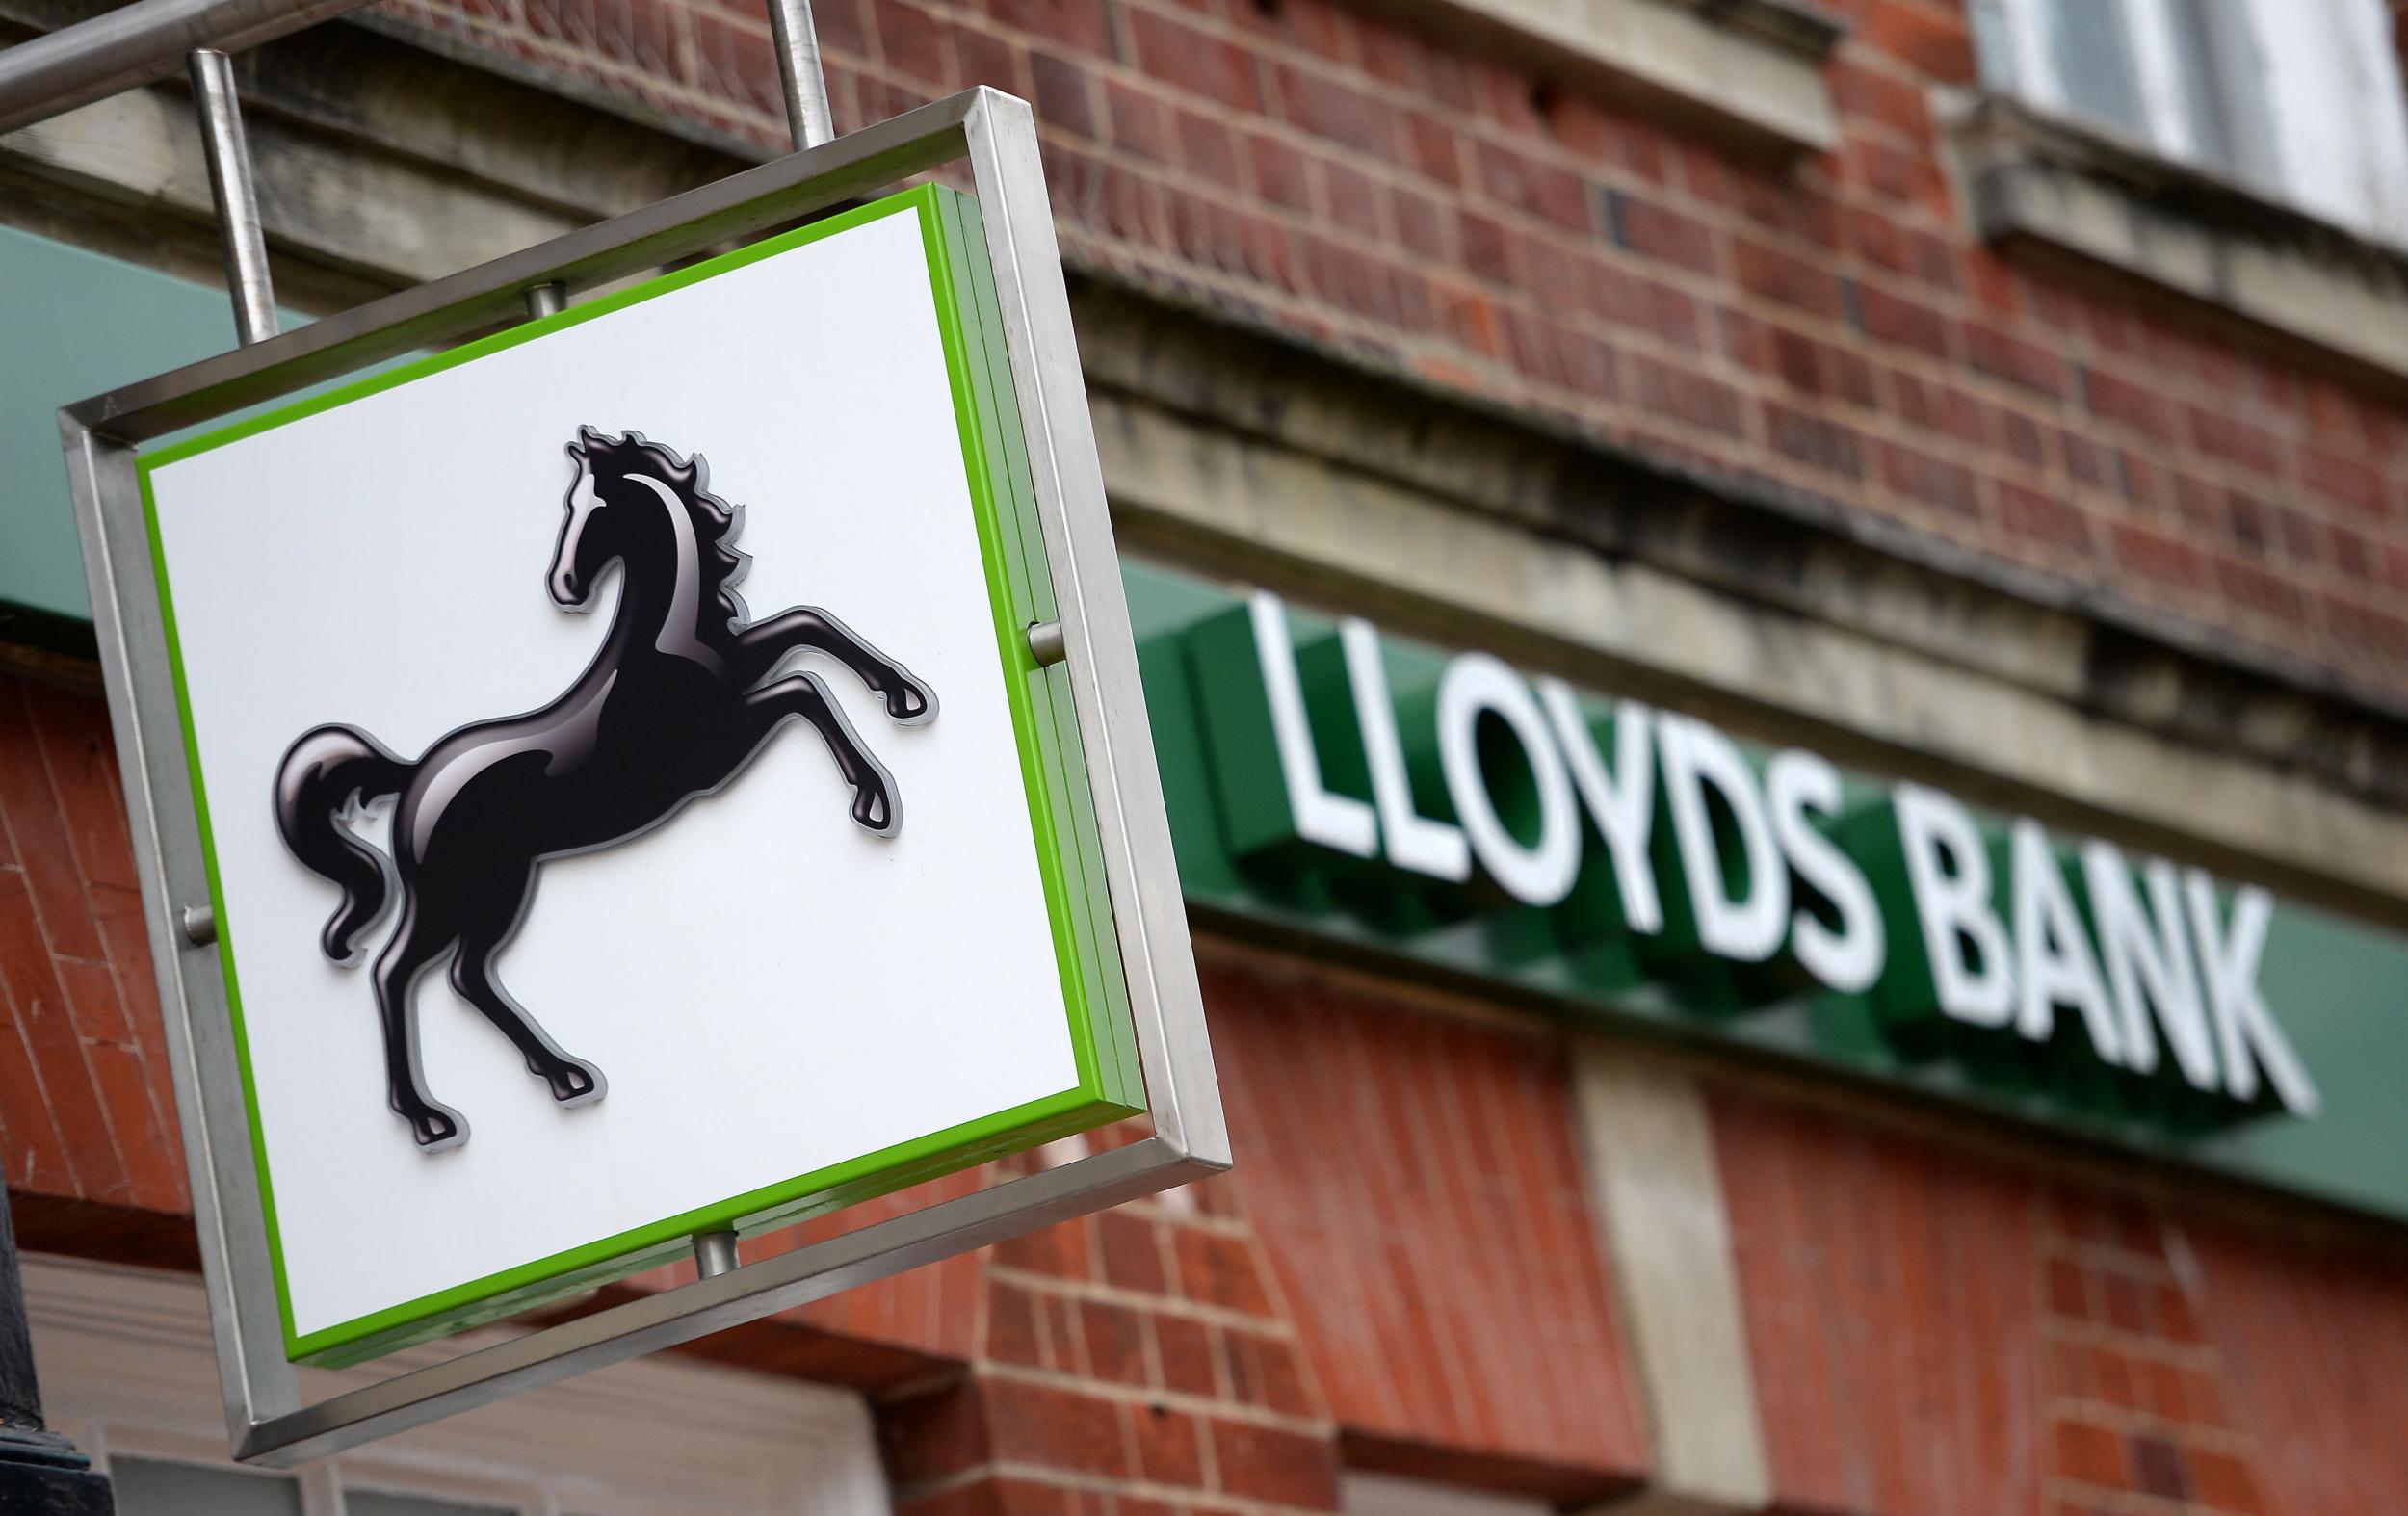 Lloyds has seen its profits double